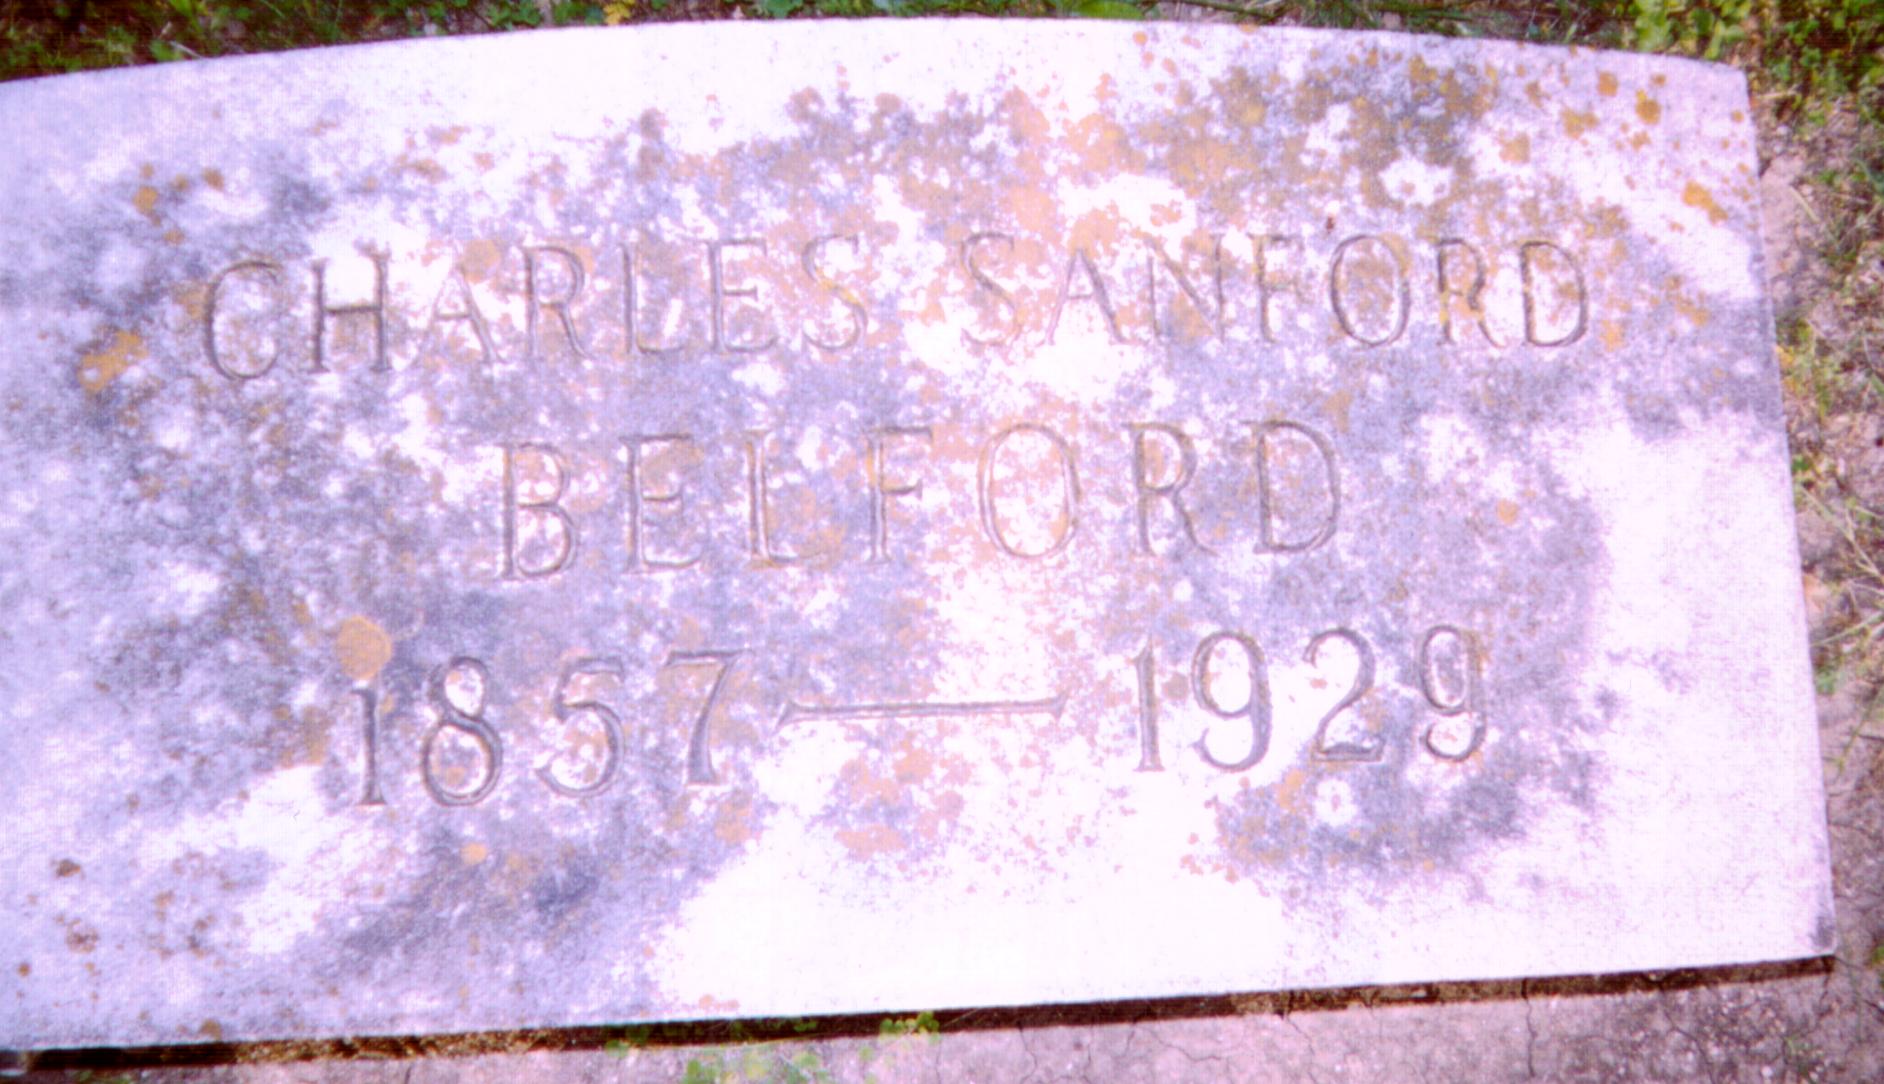 Charles Belford's gravesite